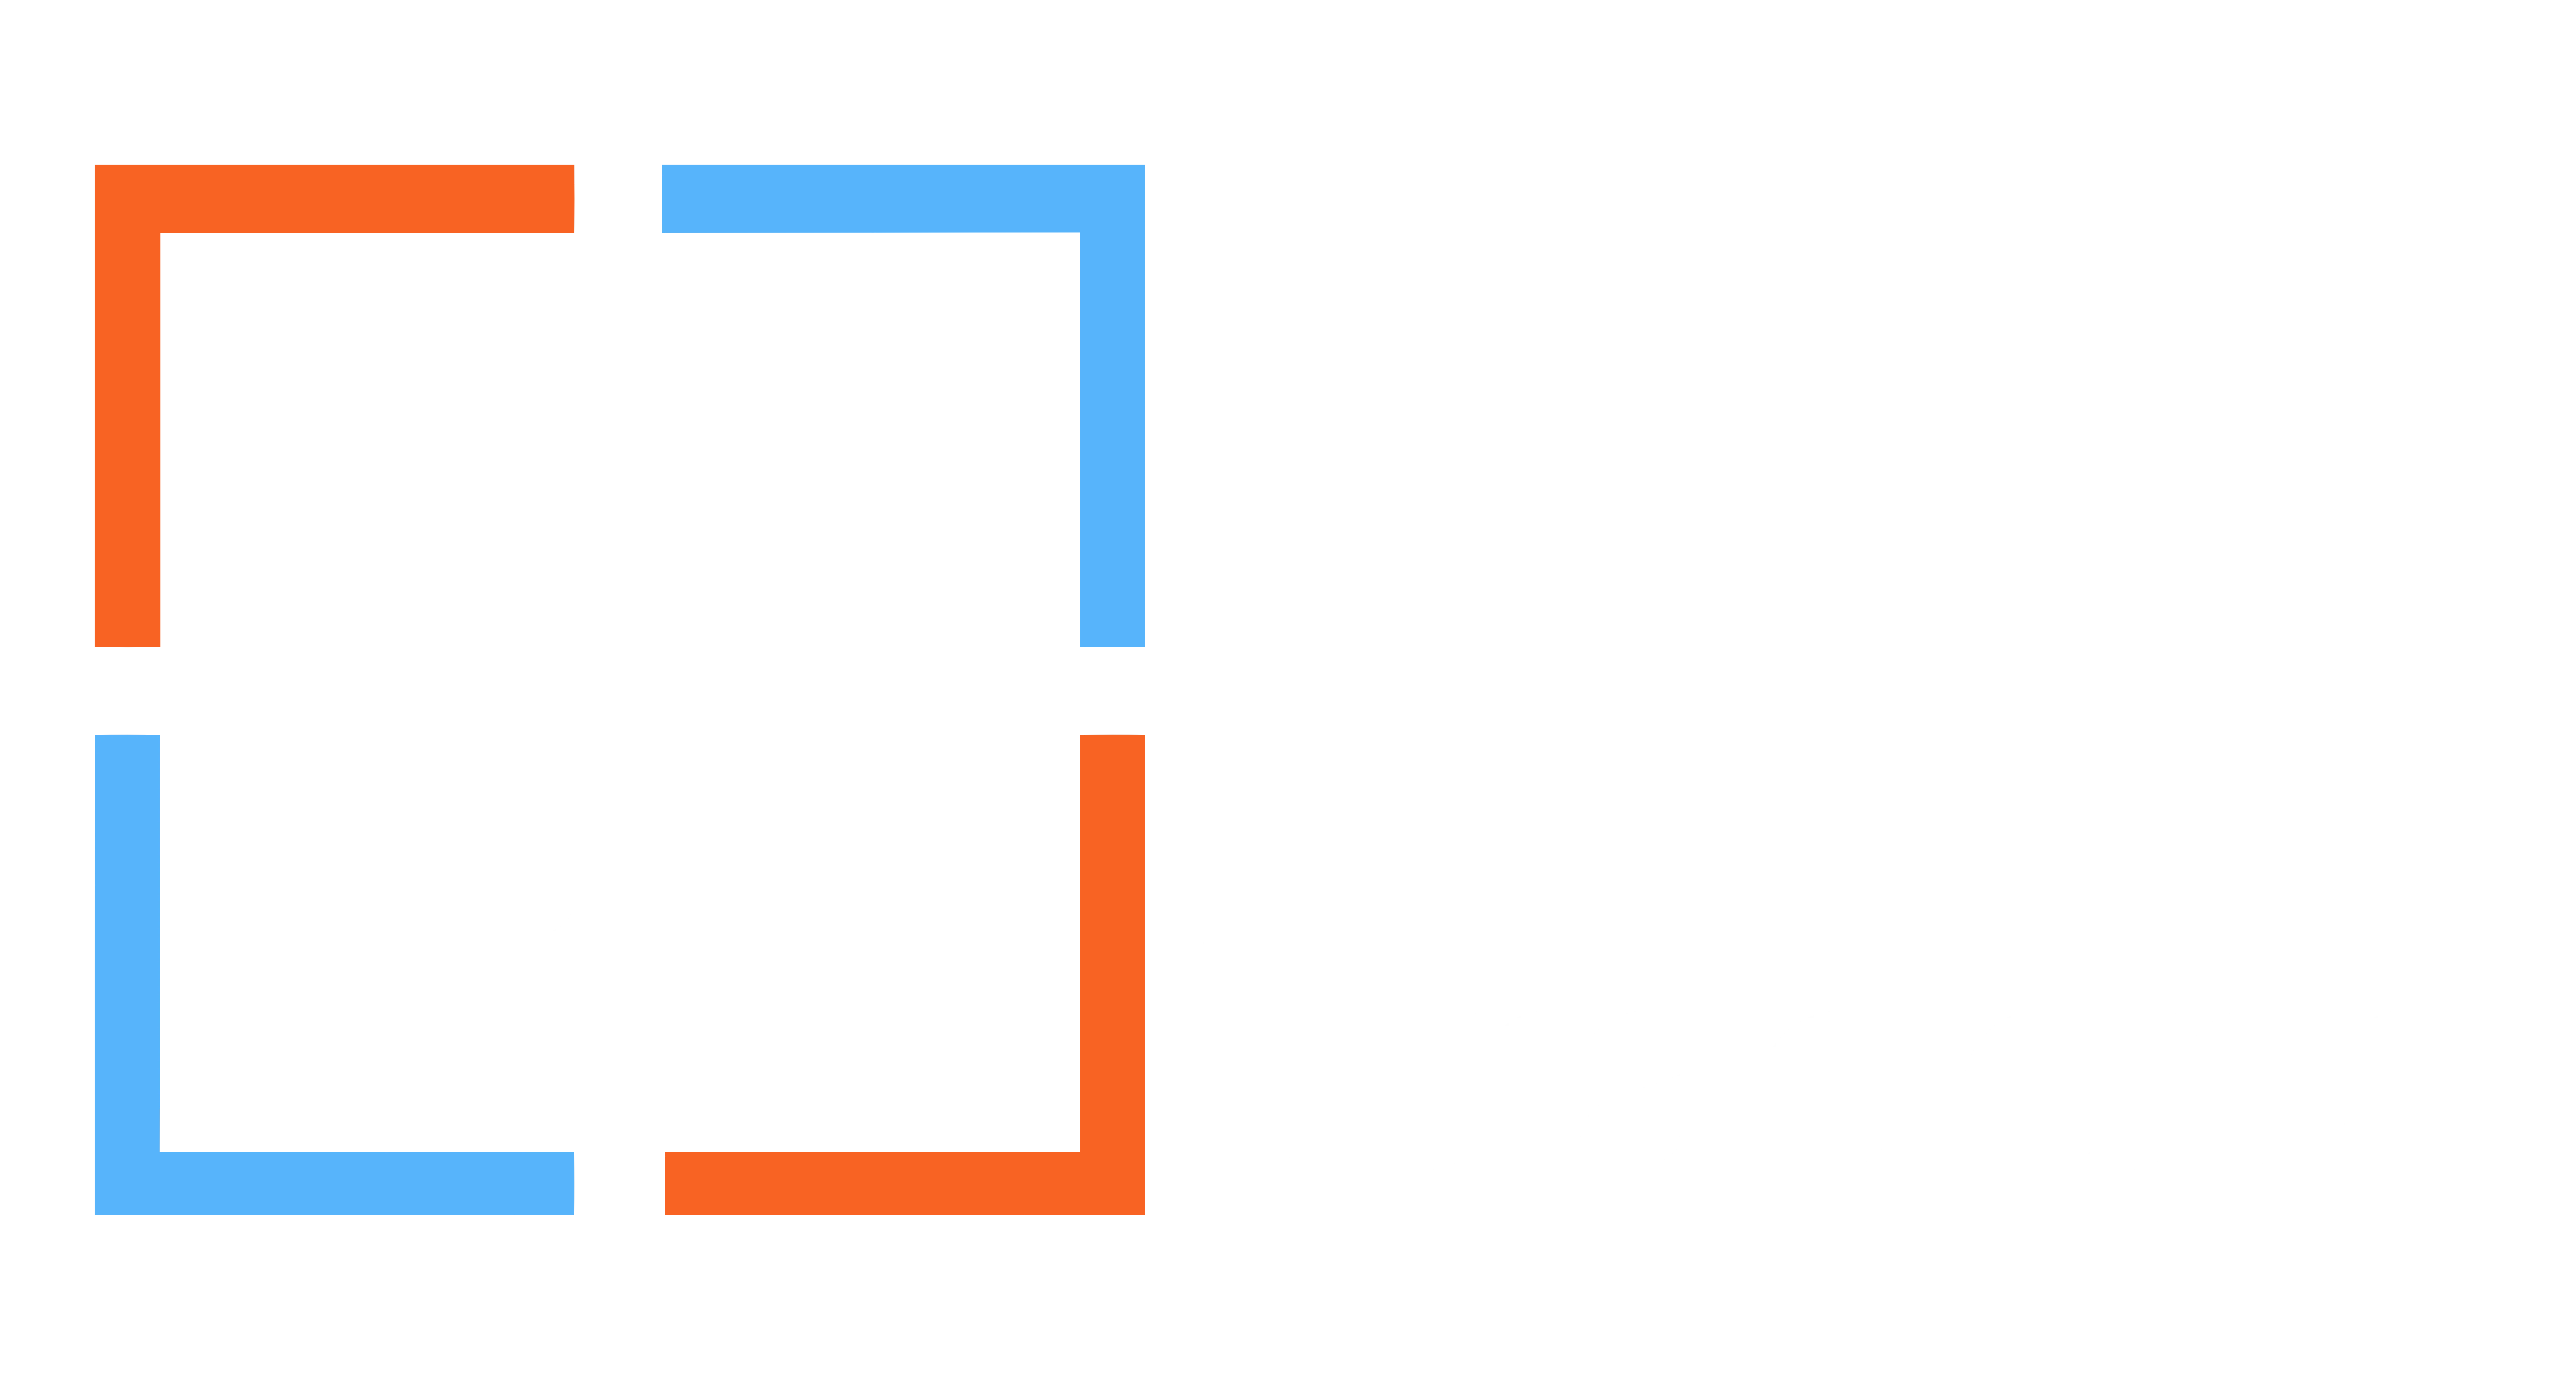 Trades